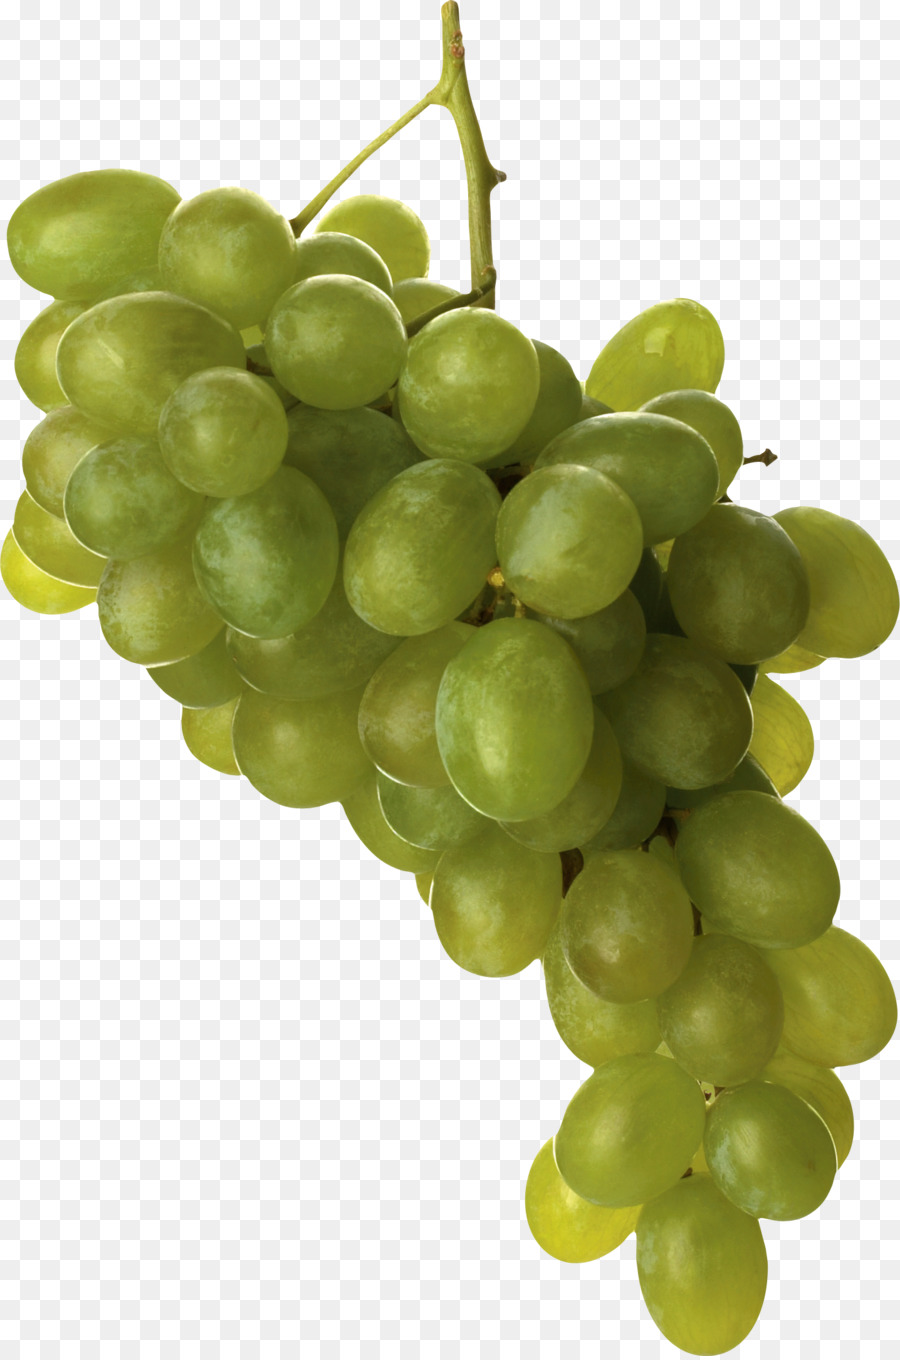 Grapes clipart seedless. Grape cartoon juice fruit